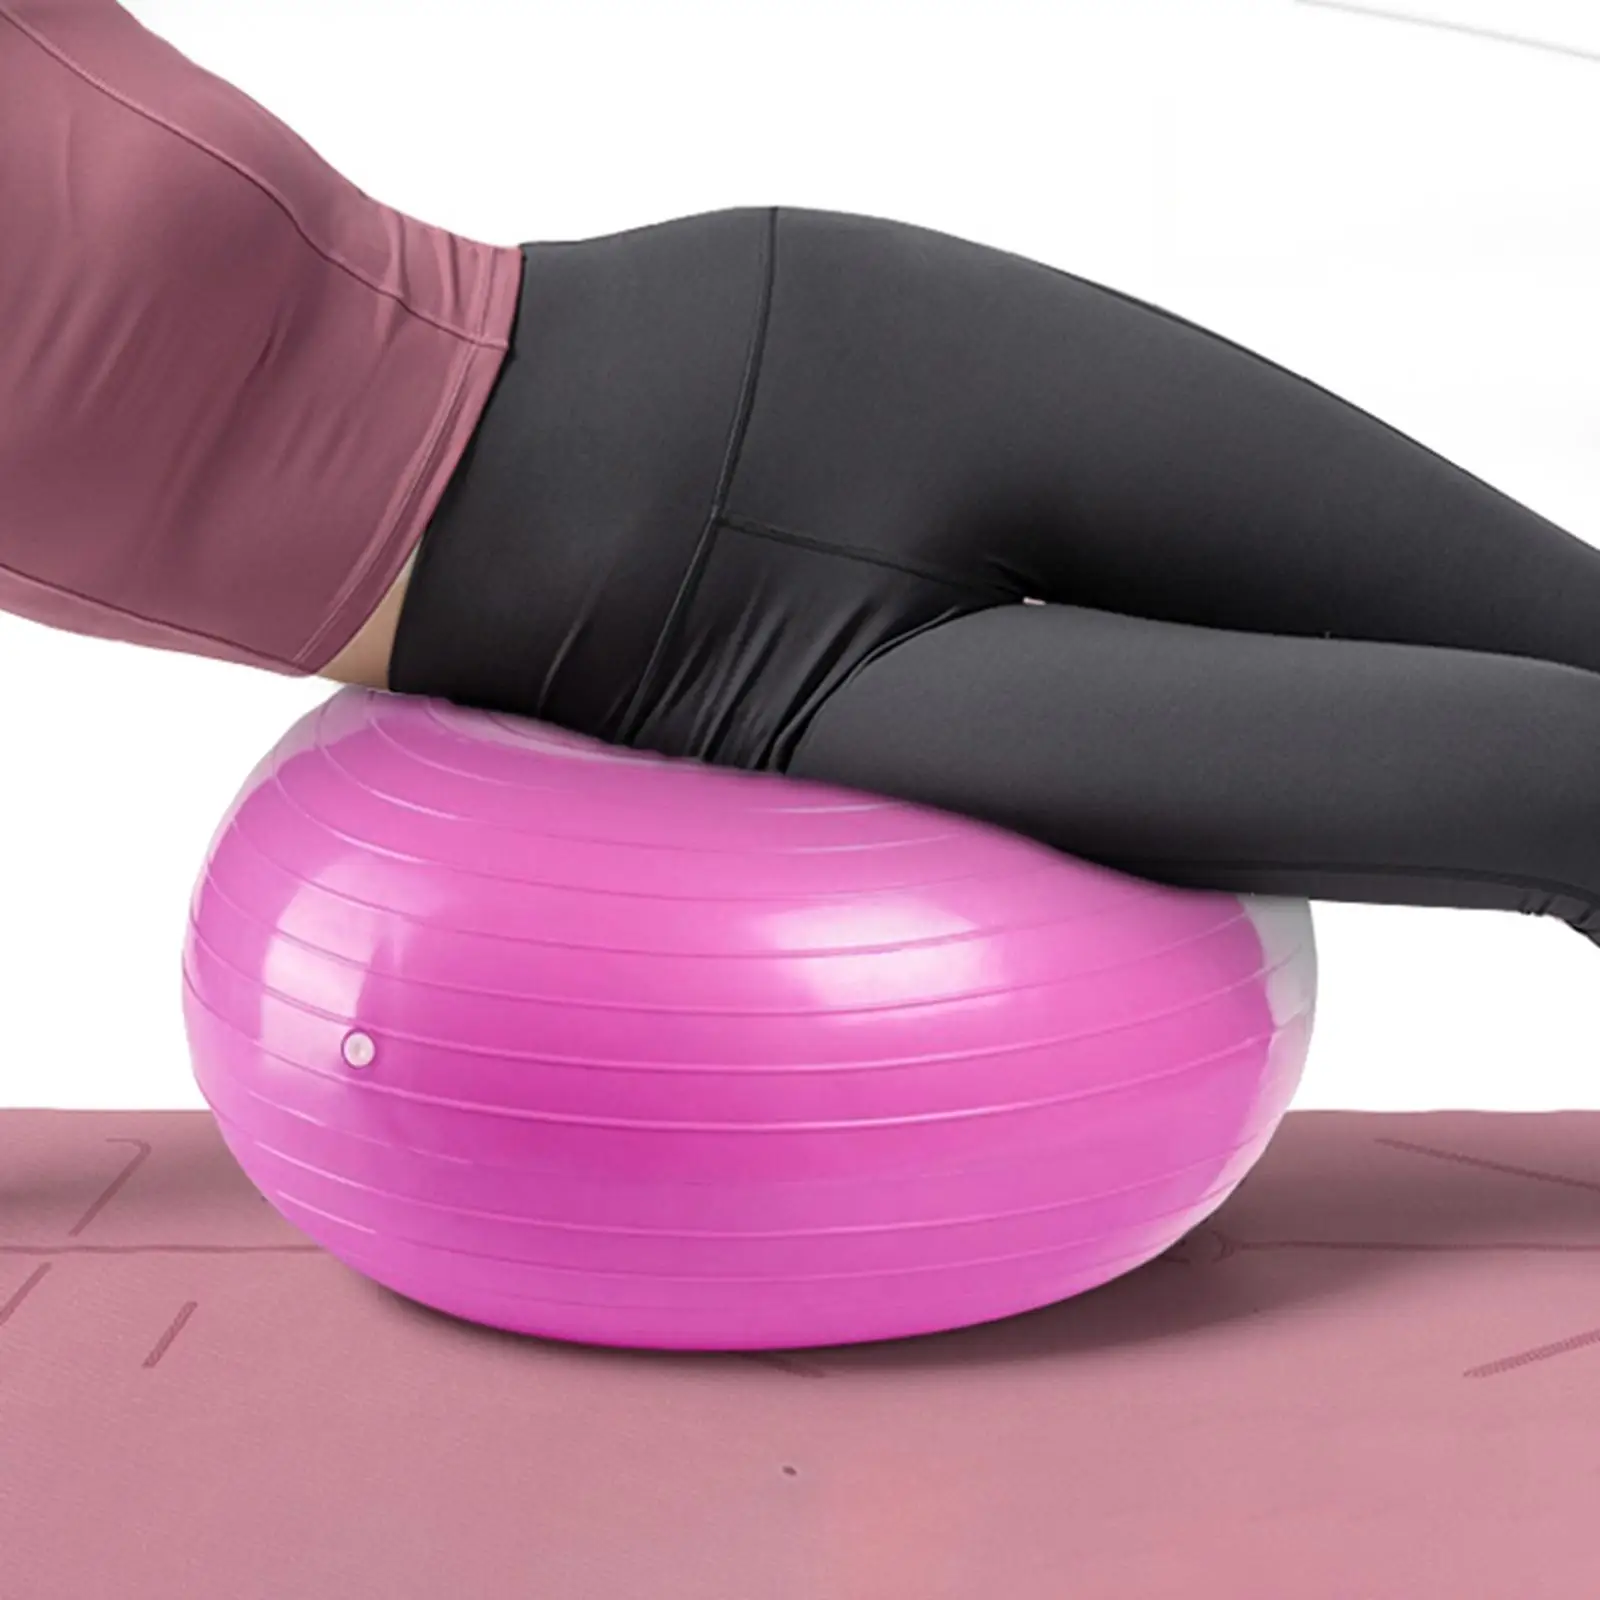 Fitness Ball Support Rhythmic Strength Yoga Ball Pilates Donut Balance for Training Home